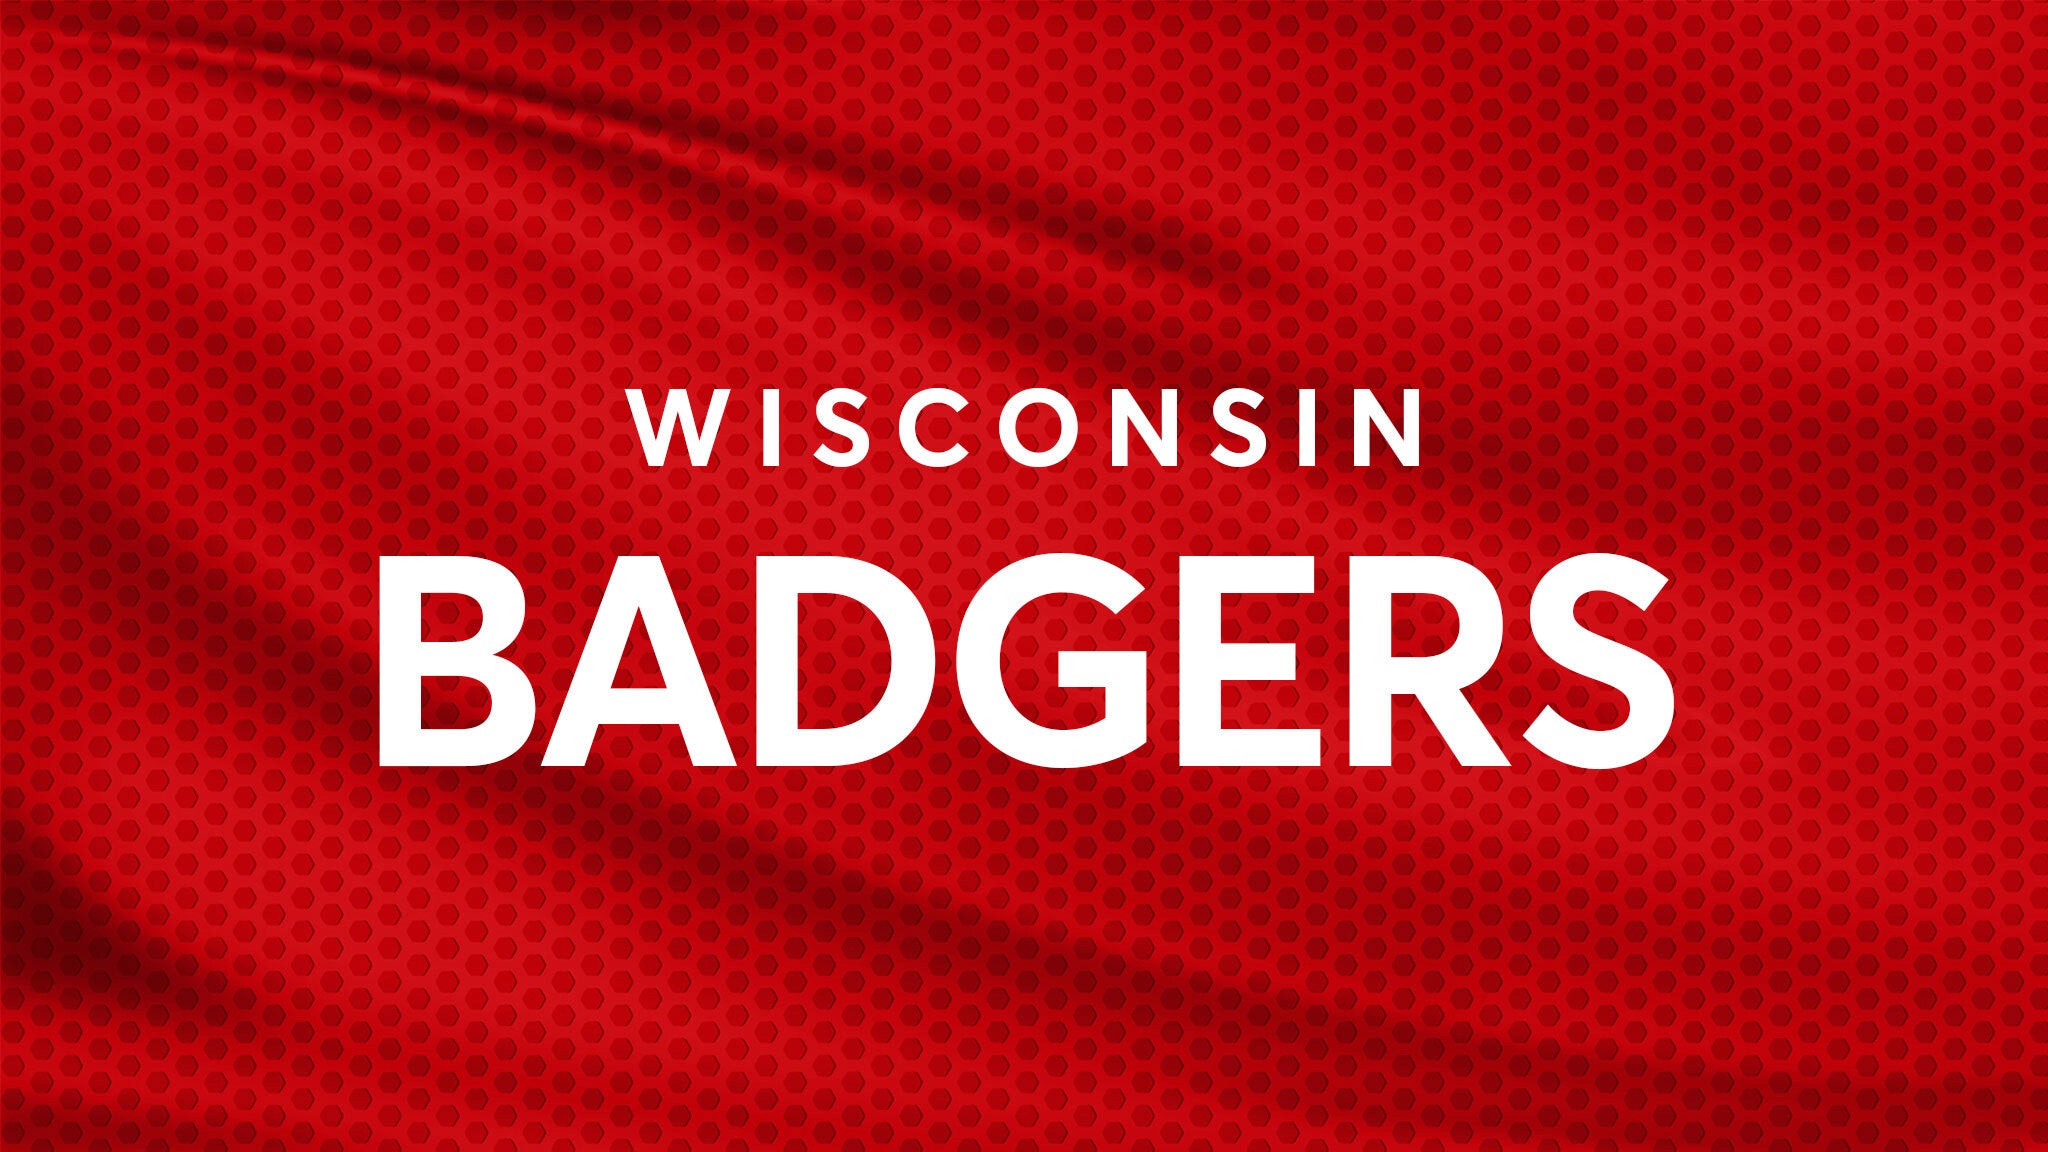 Wisconsin Badgers Football vs. Penn State Nittany Lions Football hero